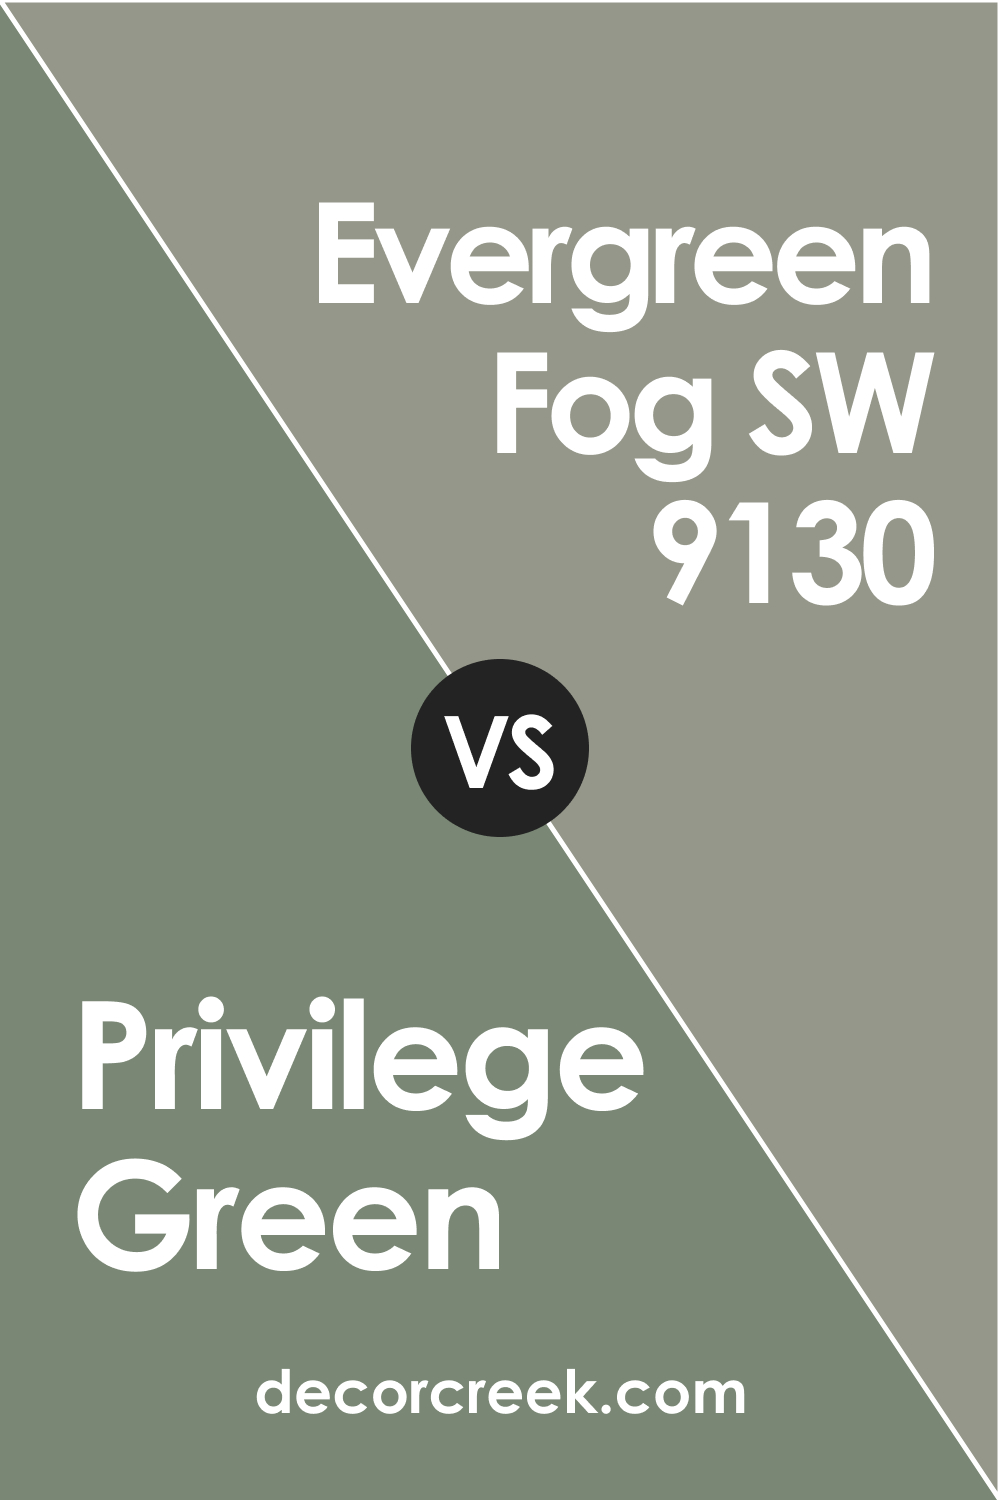 Privilege Green vs Evergreen Fog